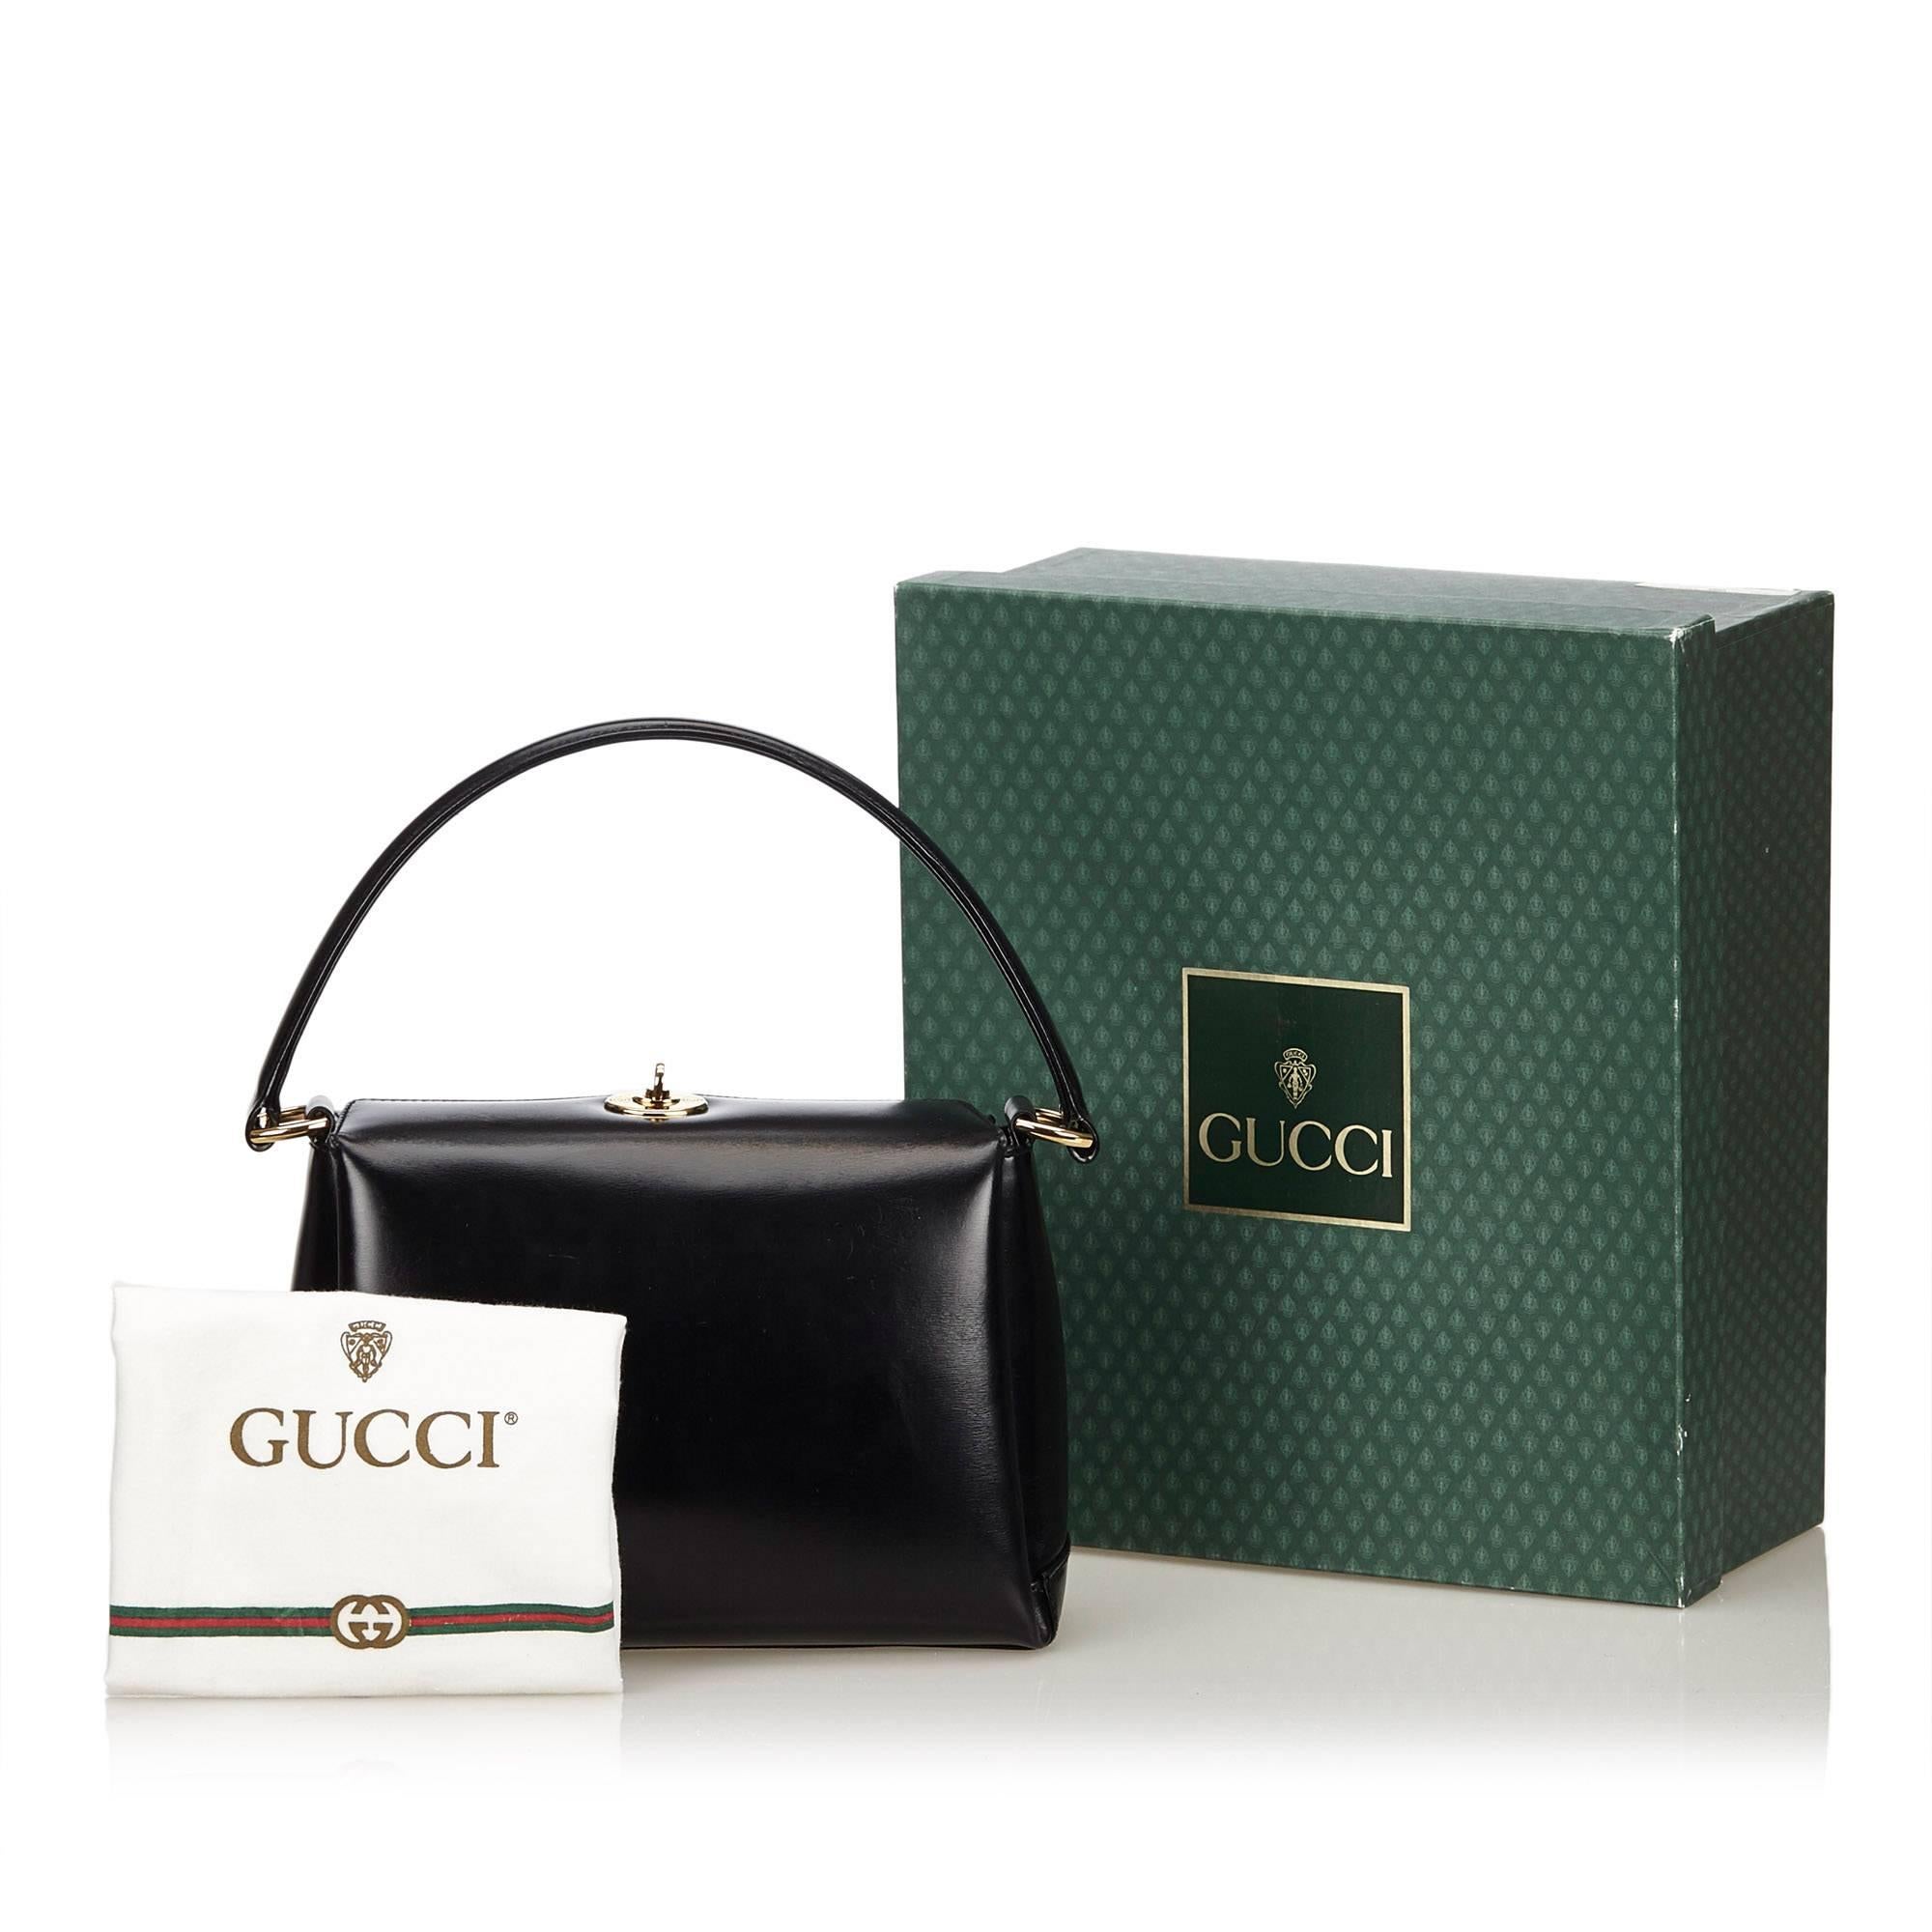 Gucci Black Leather Handbag 6